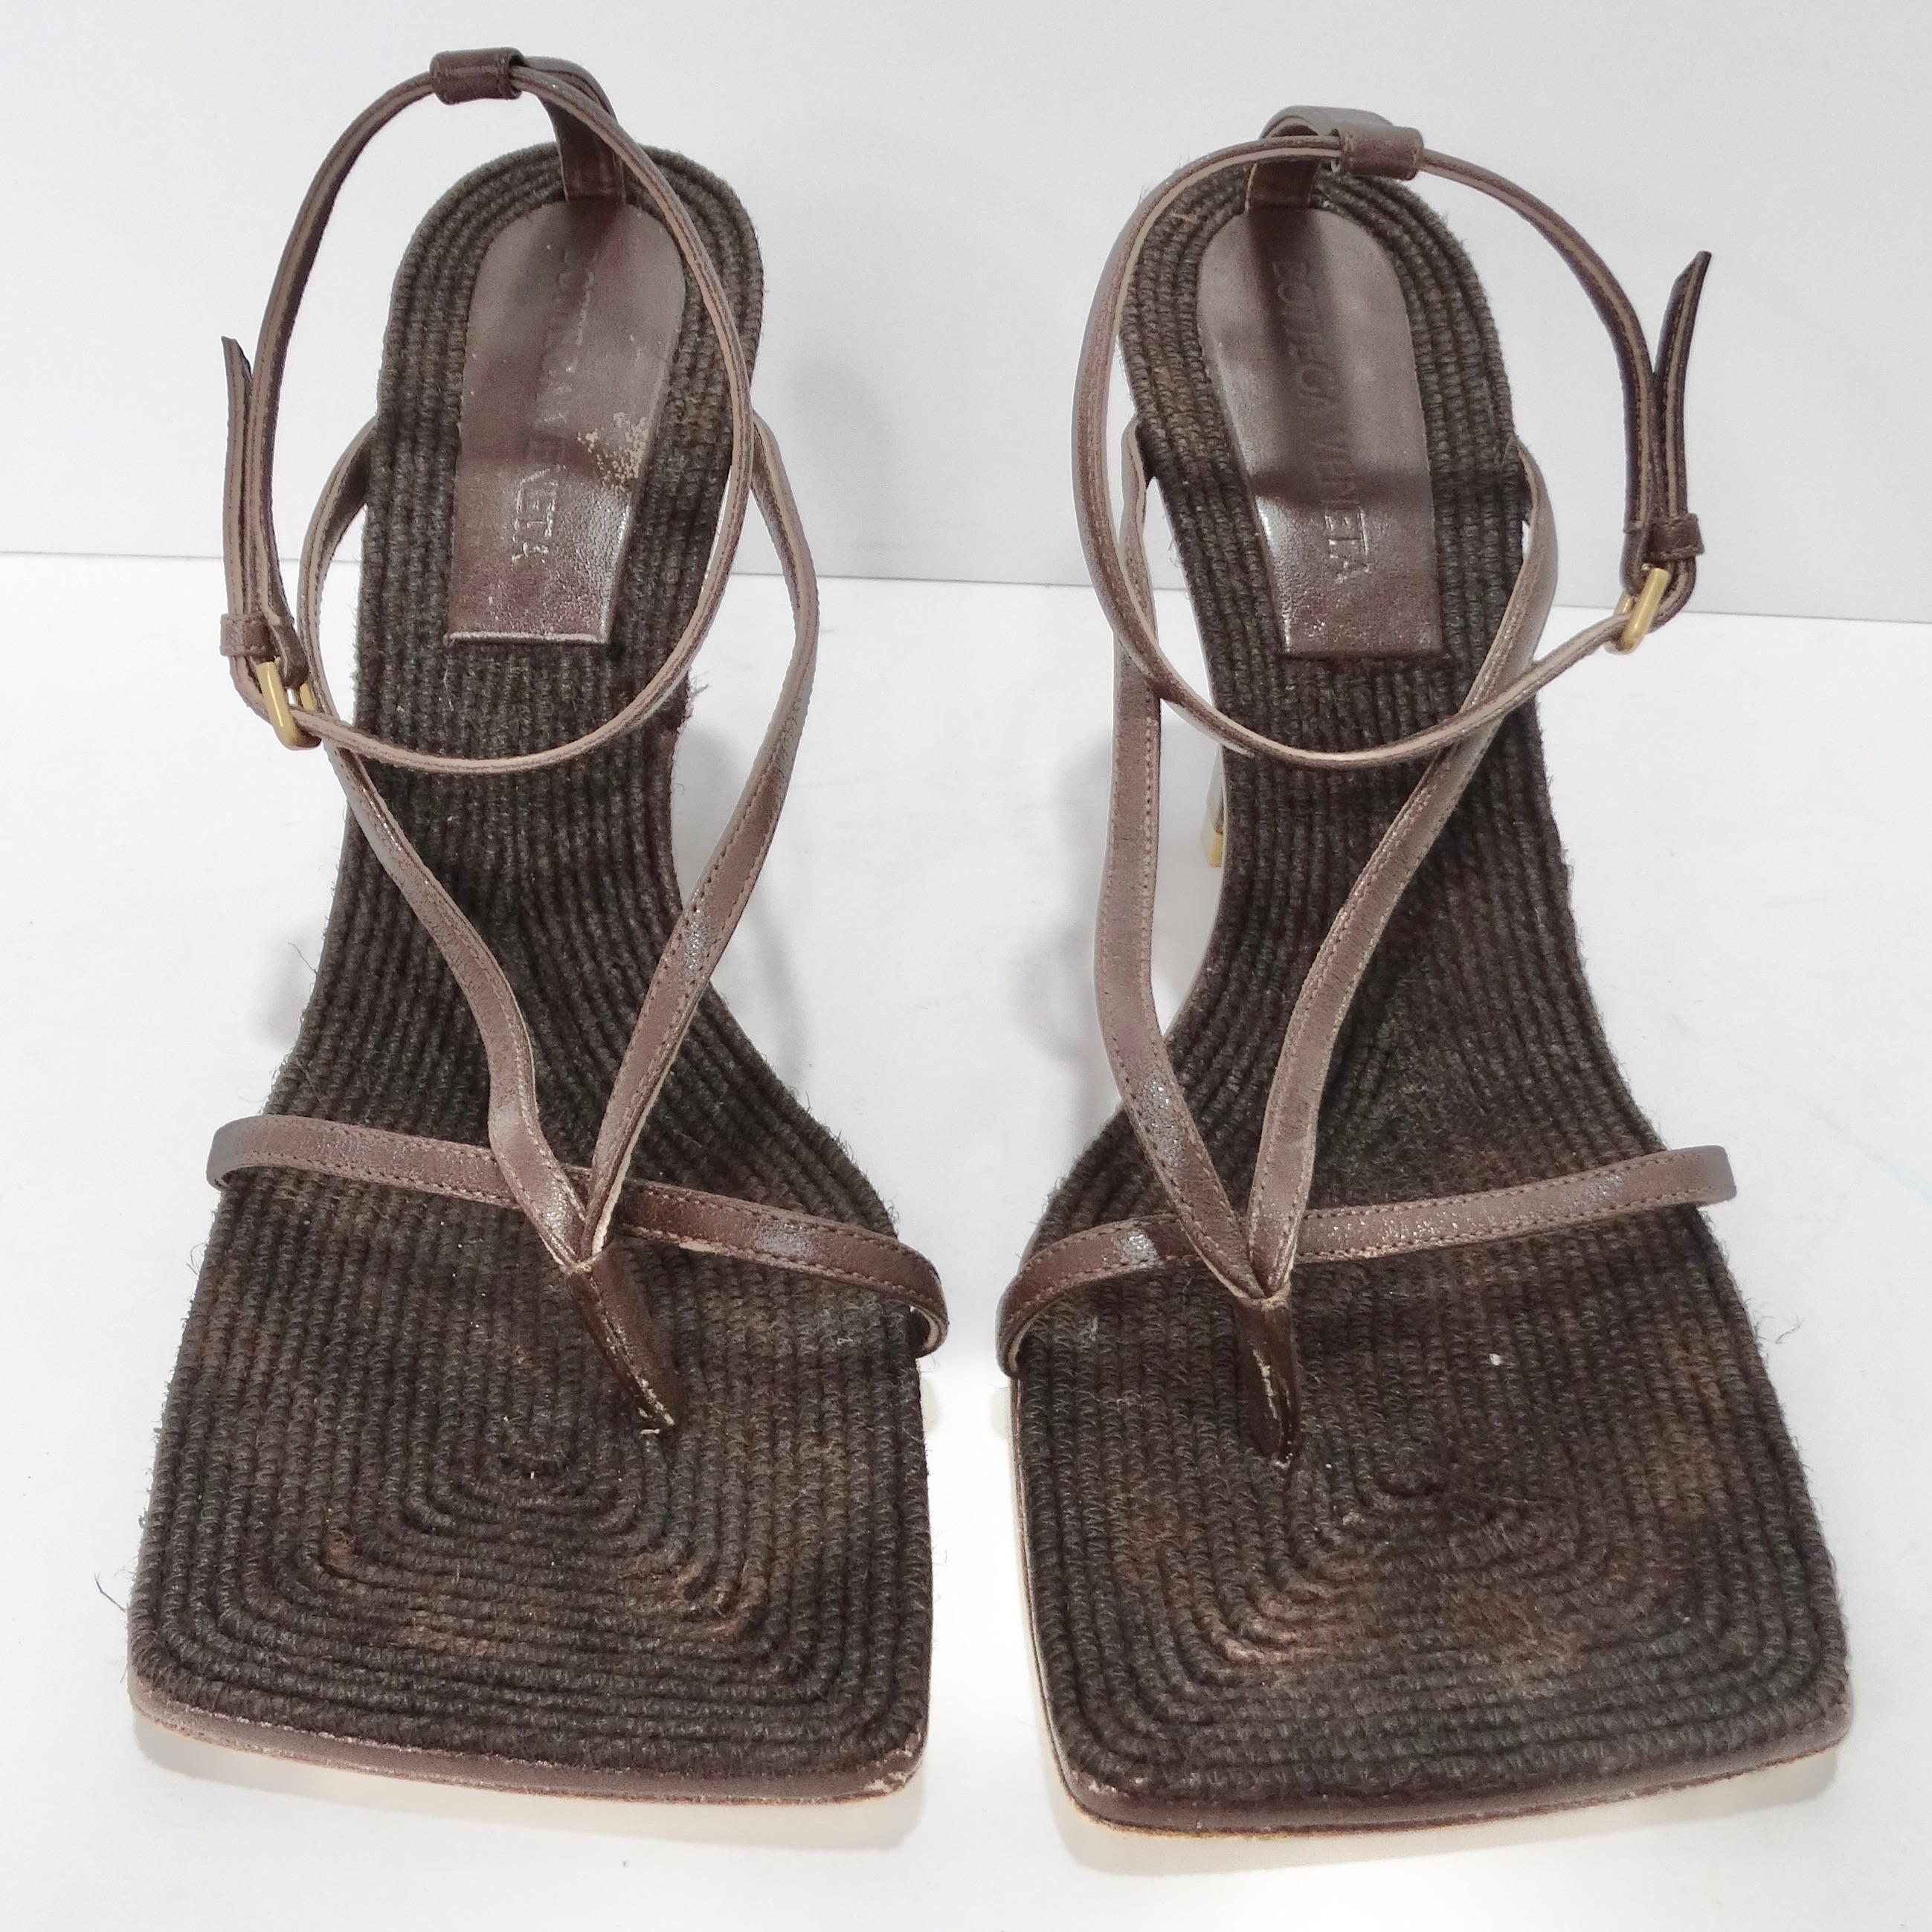 Bottega Veneta Brown Leather Square Toe Heels In Good Condition For Sale In Scottsdale, AZ